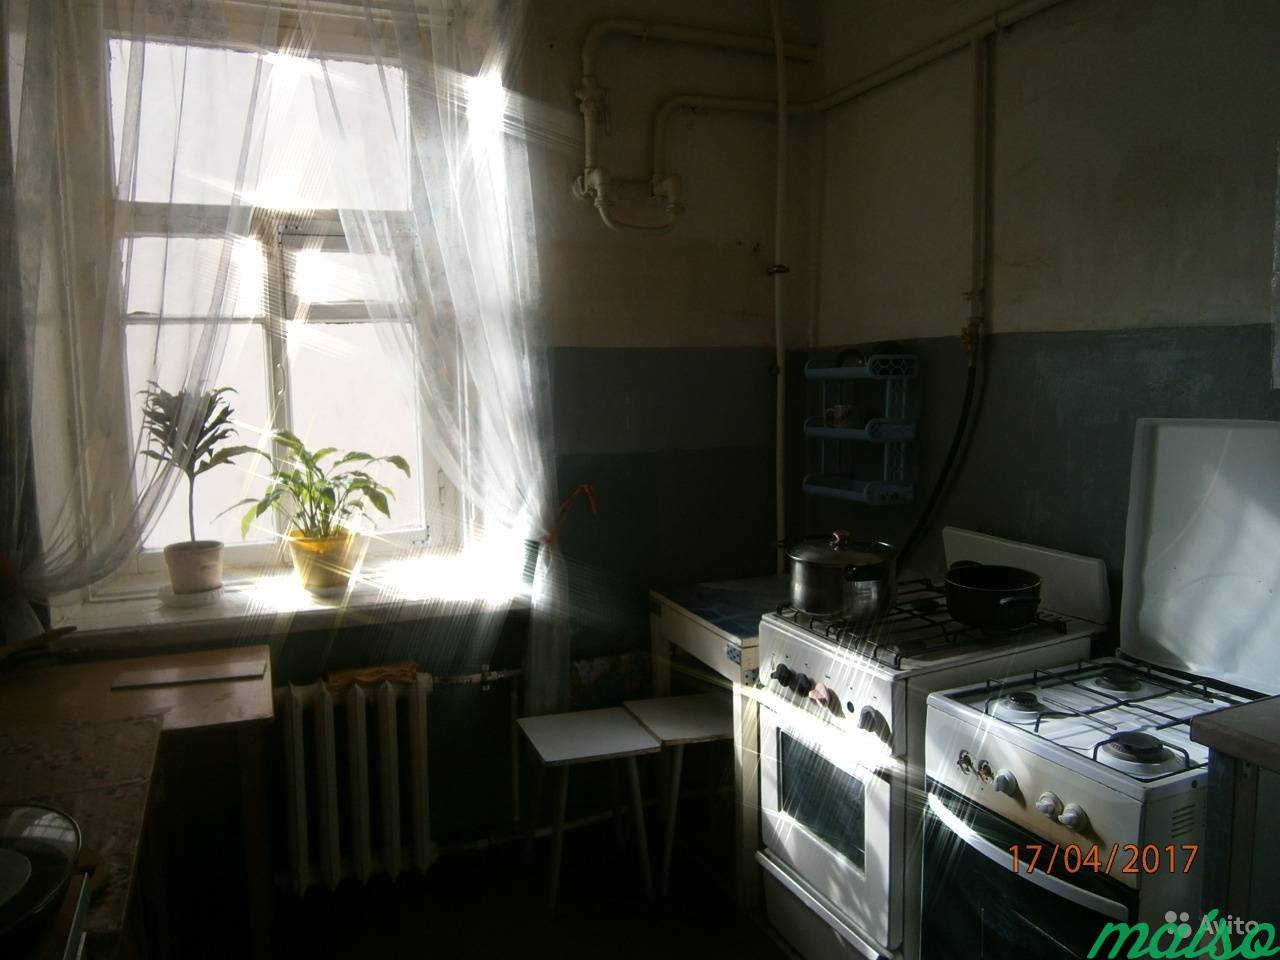 Комната 18 м² в 5-к, 3/5 эт. в Санкт-Петербурге. Фото 5